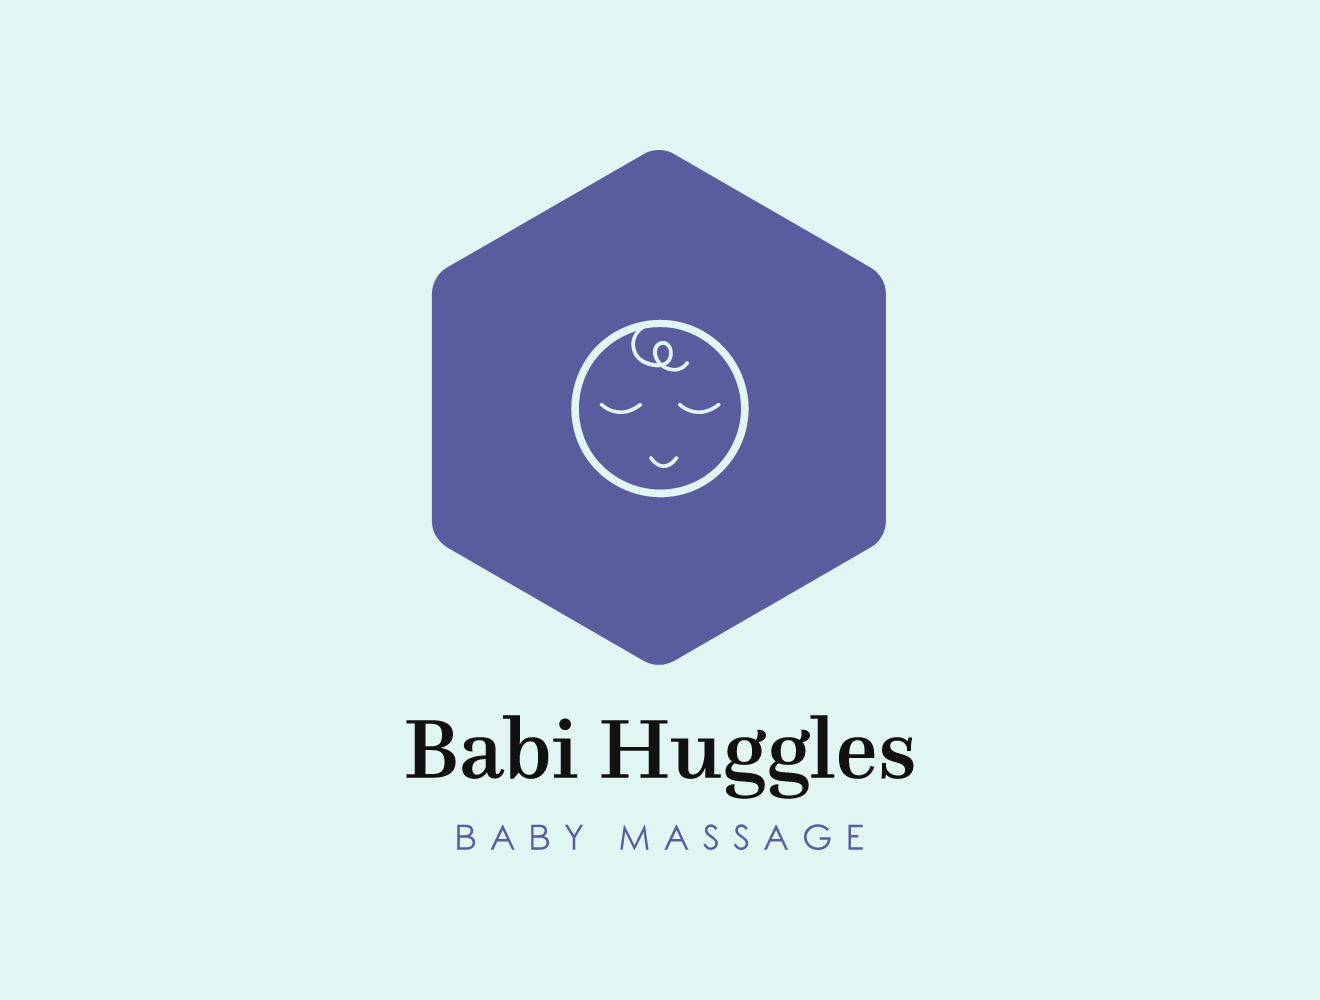 Babi Huggles 's logo